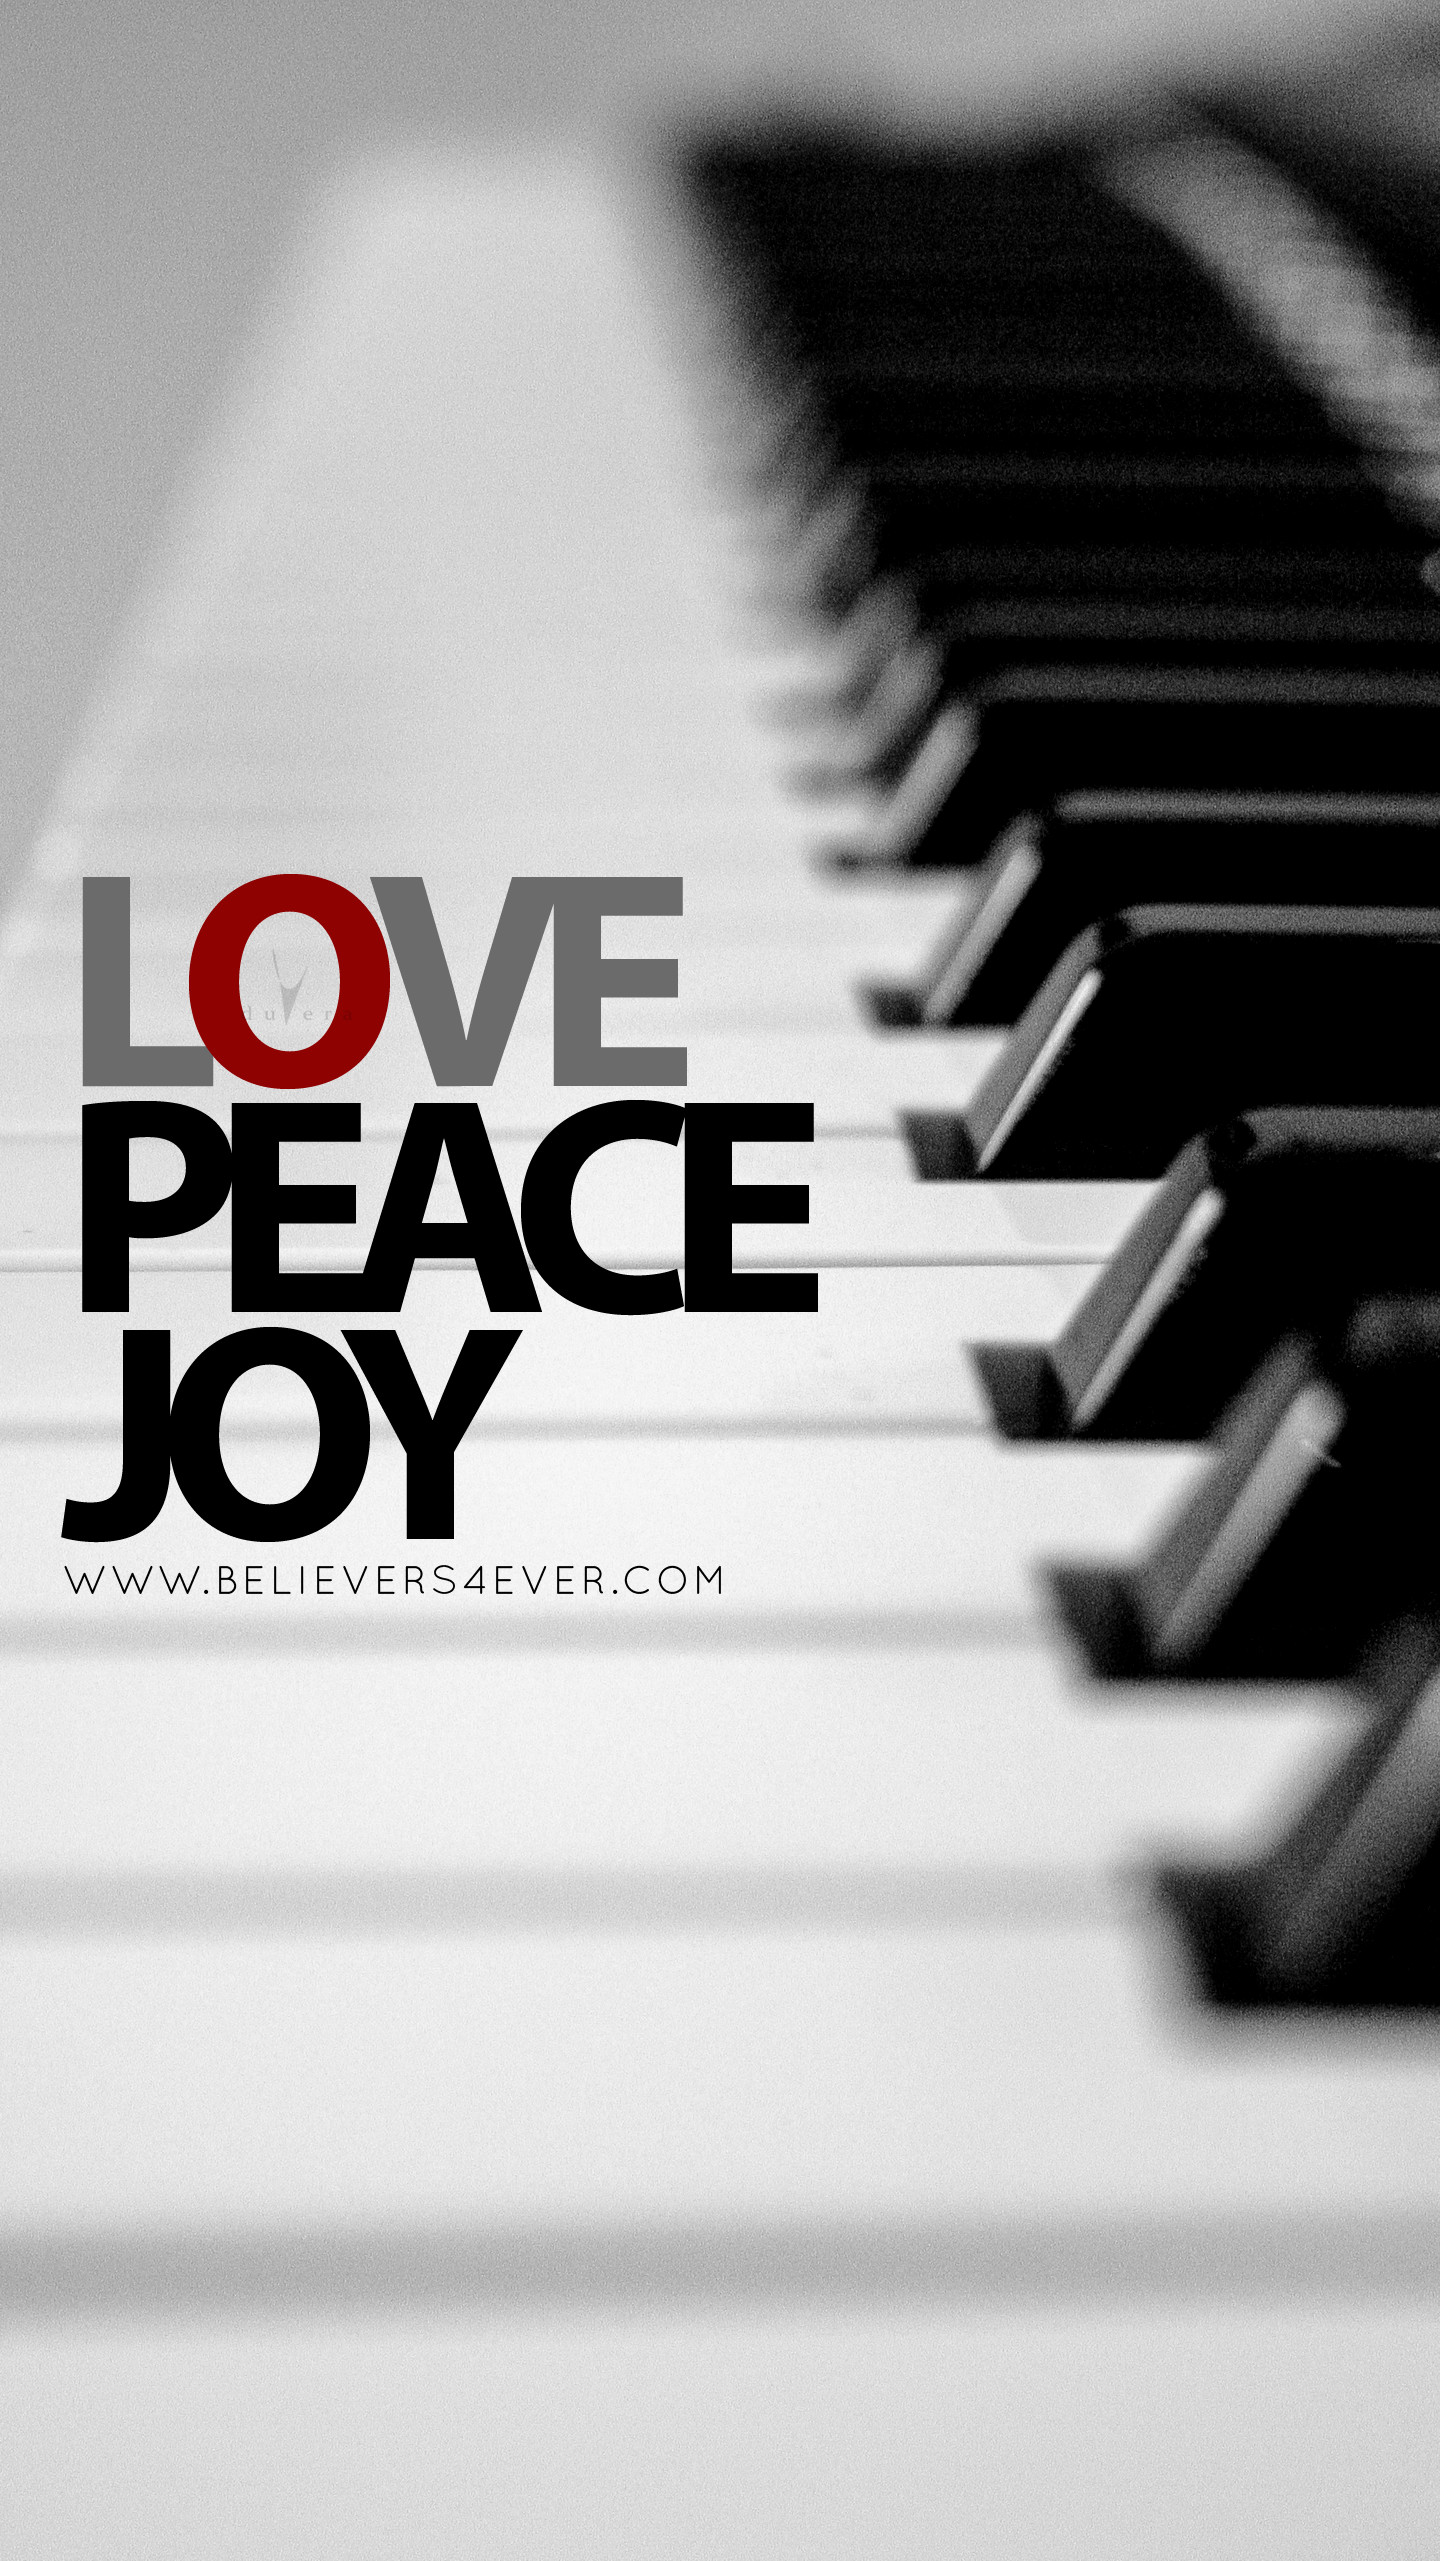 Love peace joy